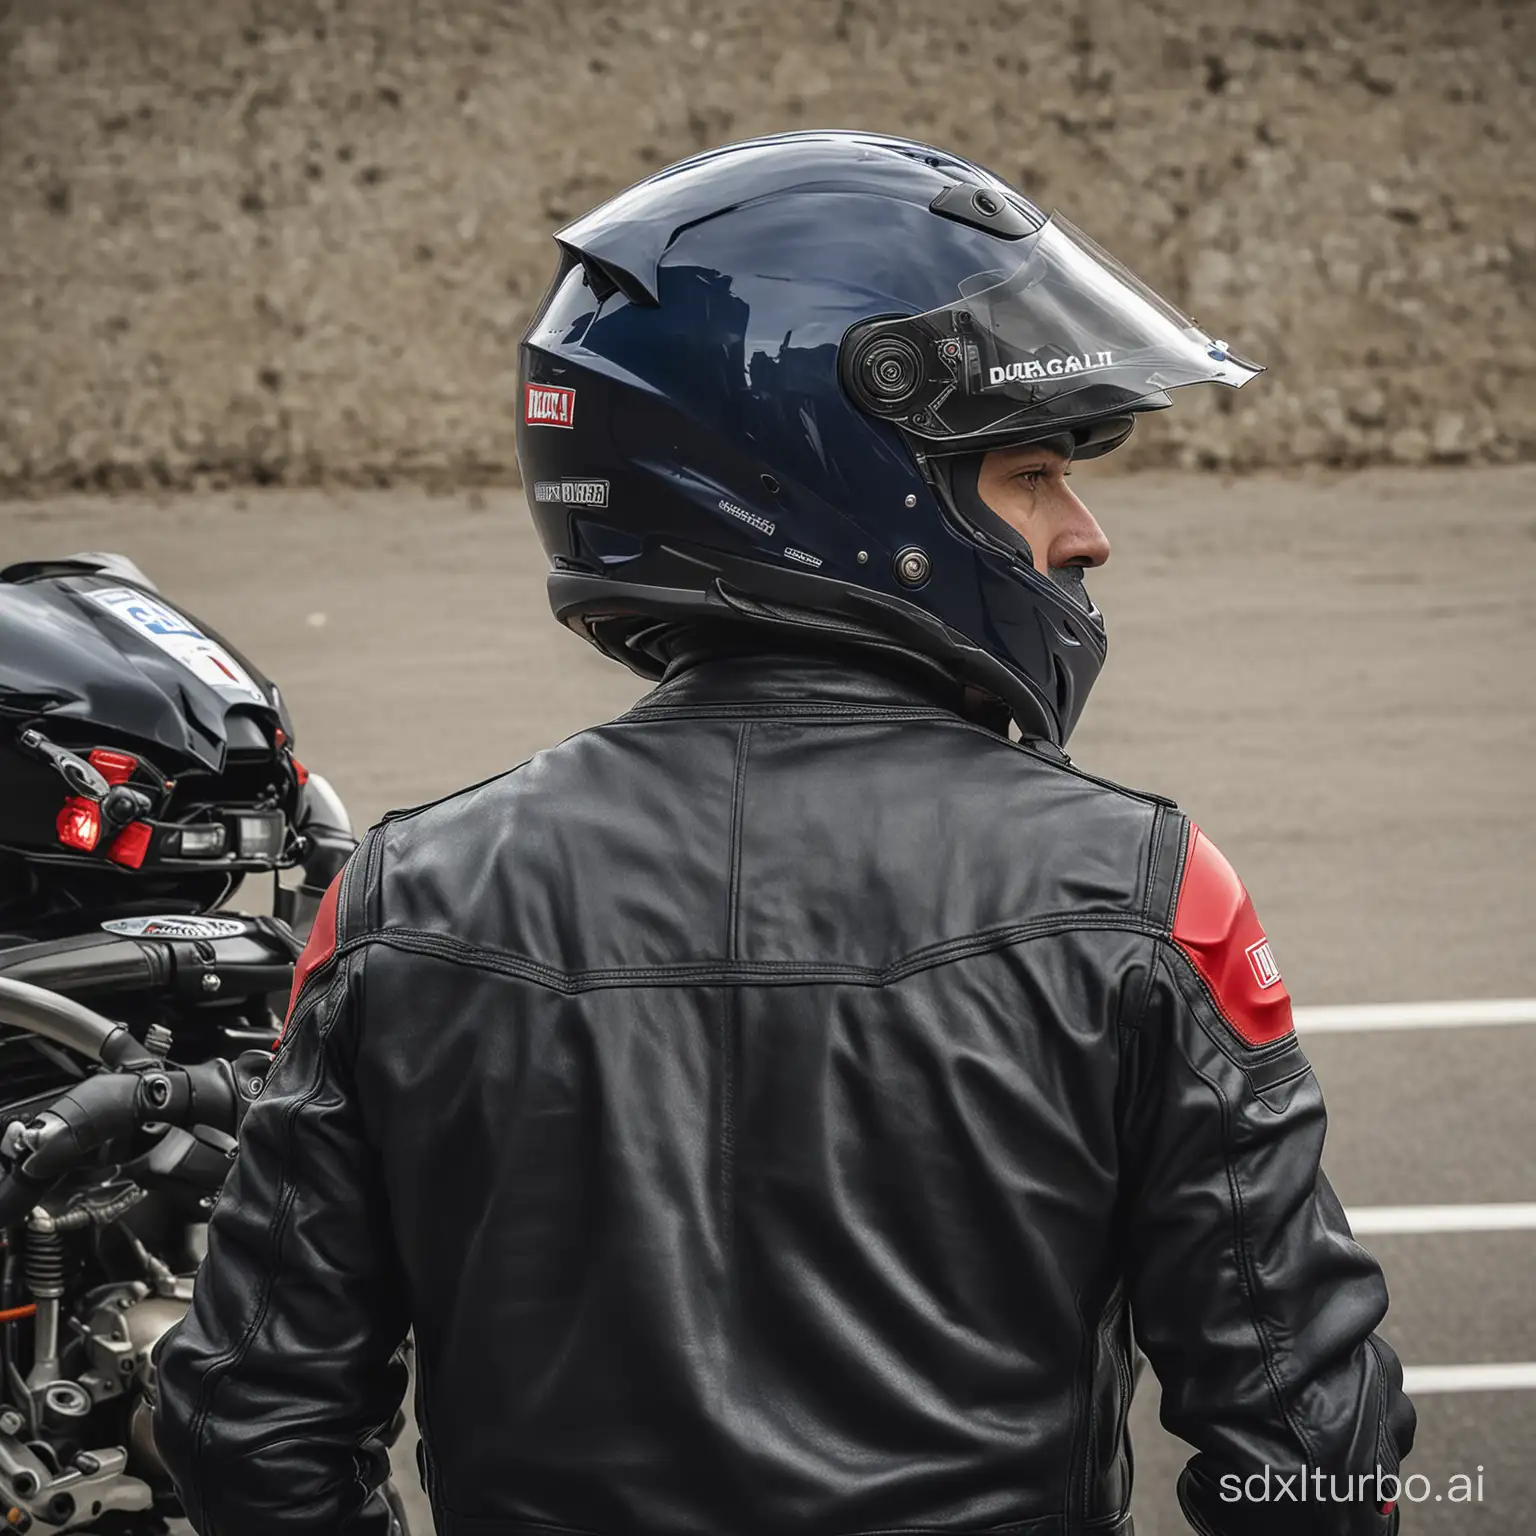 Biker-in-Black-Motorcycle-Gear-with-Ducati-V4